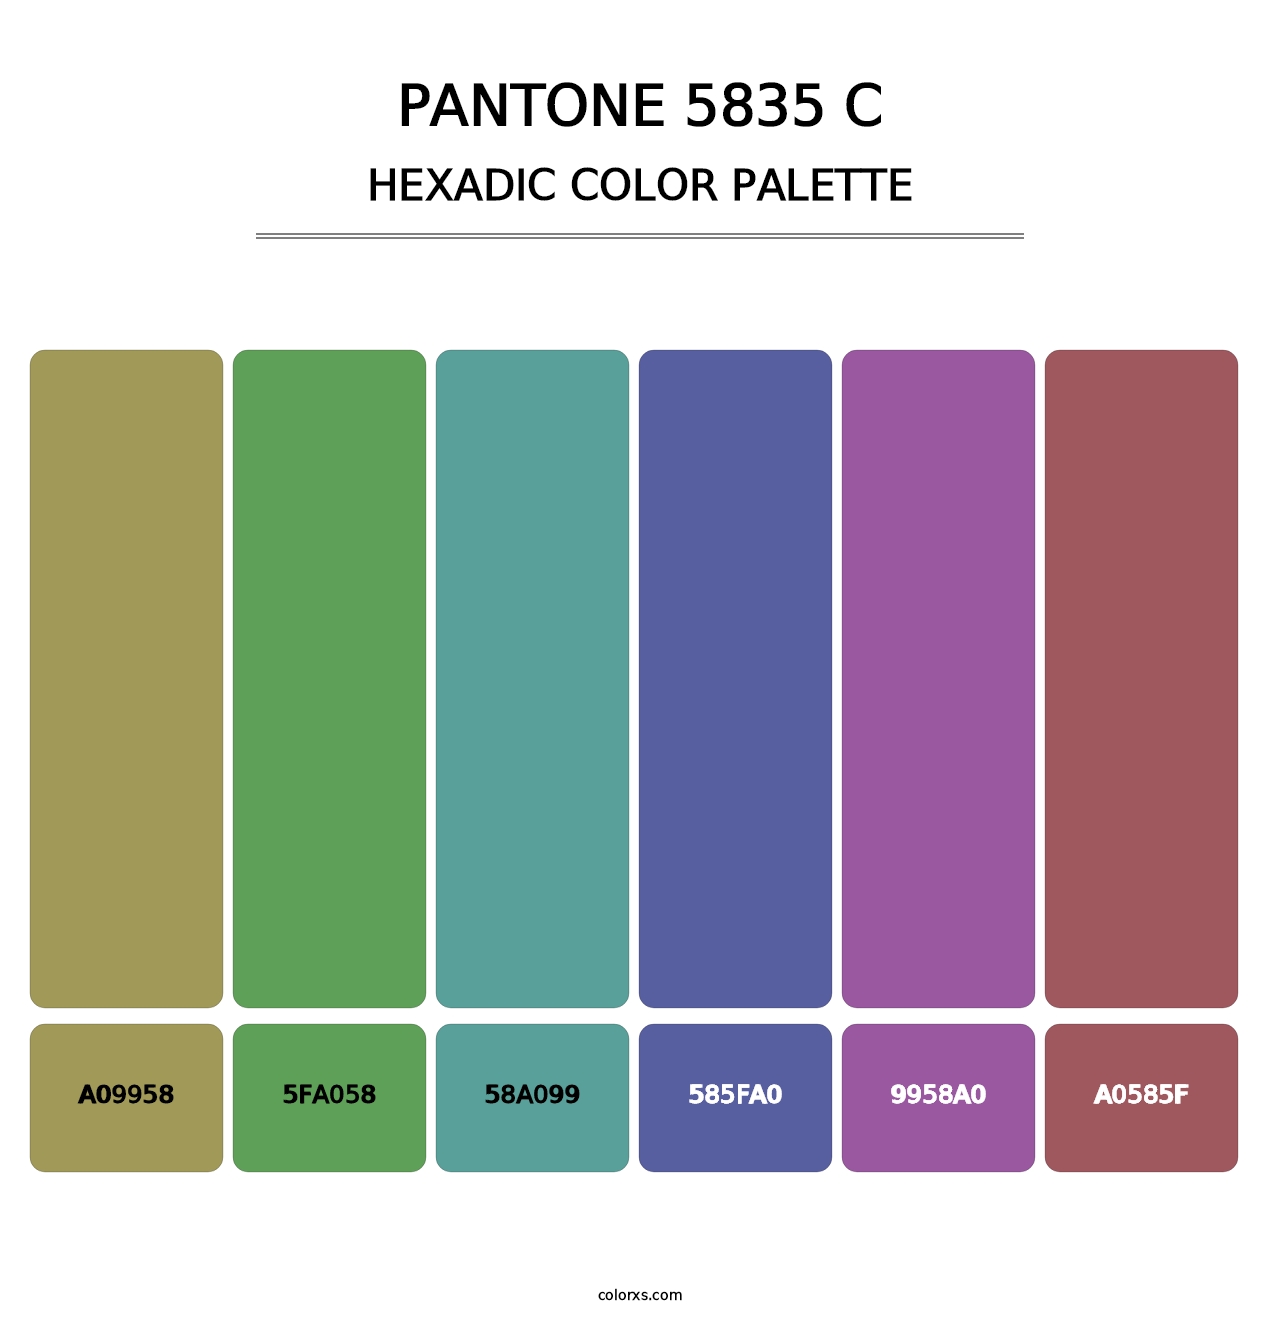 PANTONE 5835 C - Hexadic Color Palette